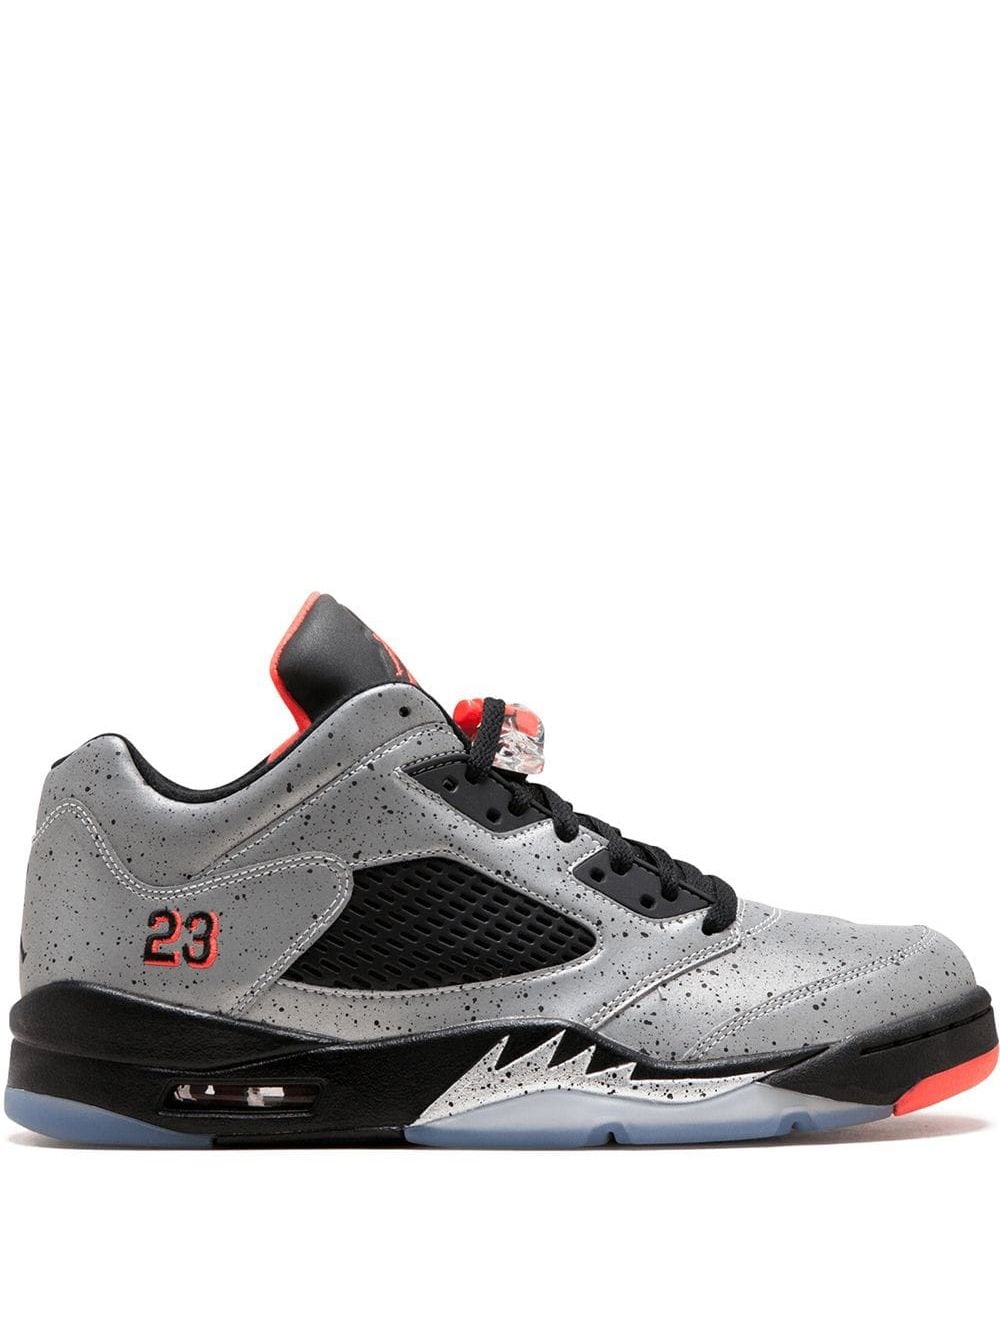 Jordan x Neymar Air Jordan 5 Retro Low sneakers - Grey